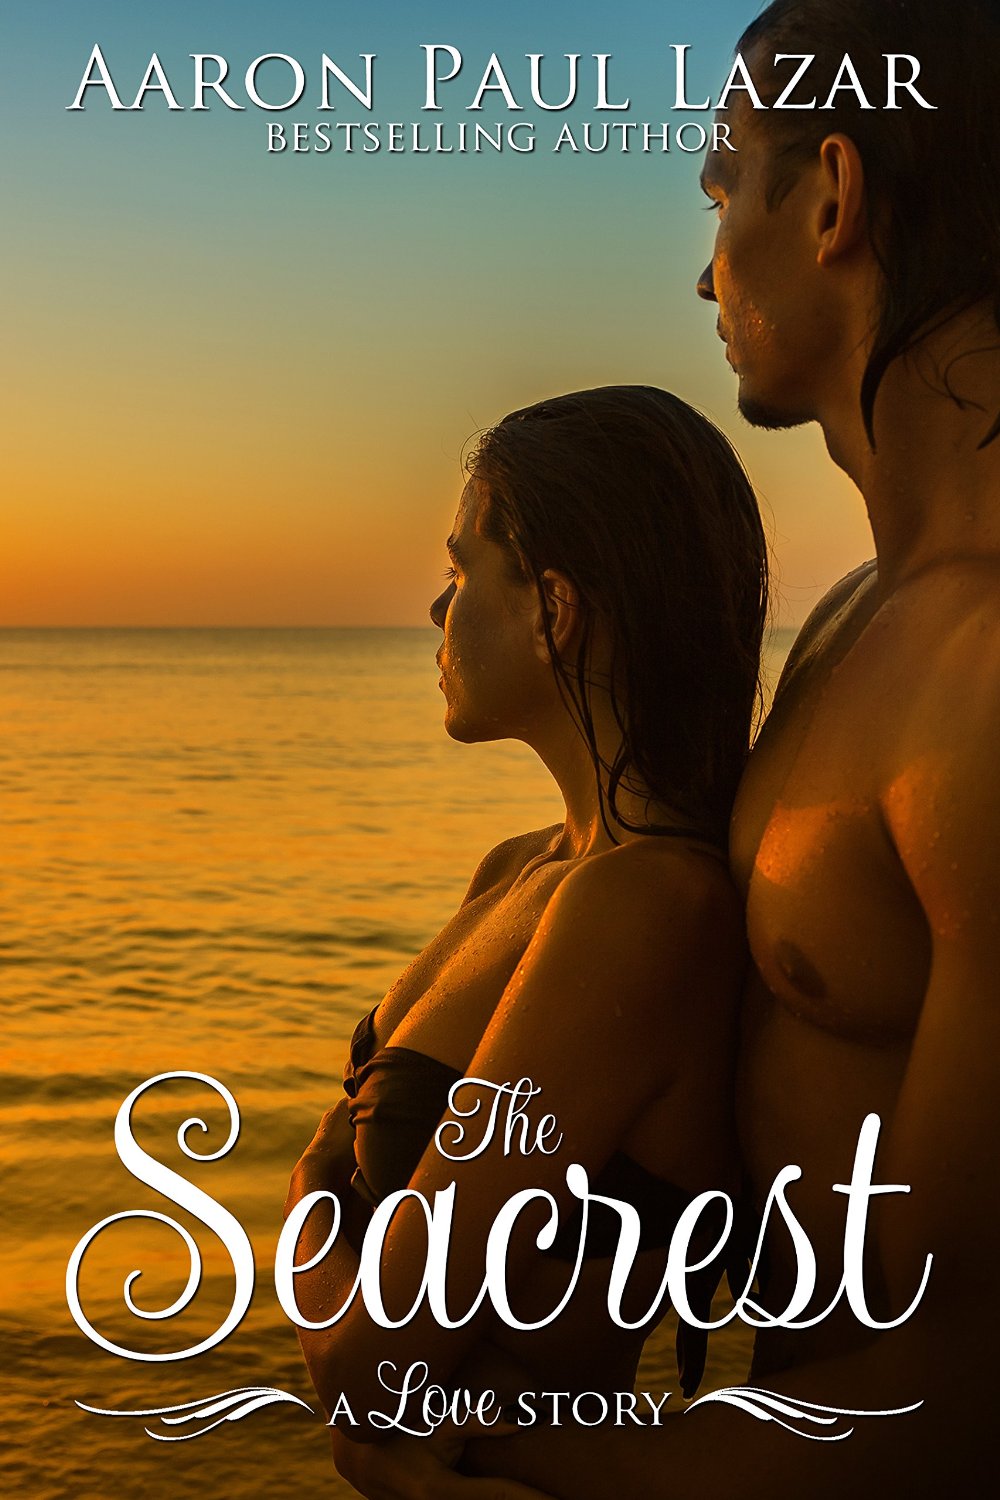 The Seacrest: A love story (Paines Creek Beach Book 1) by Aaron Paul Lazar